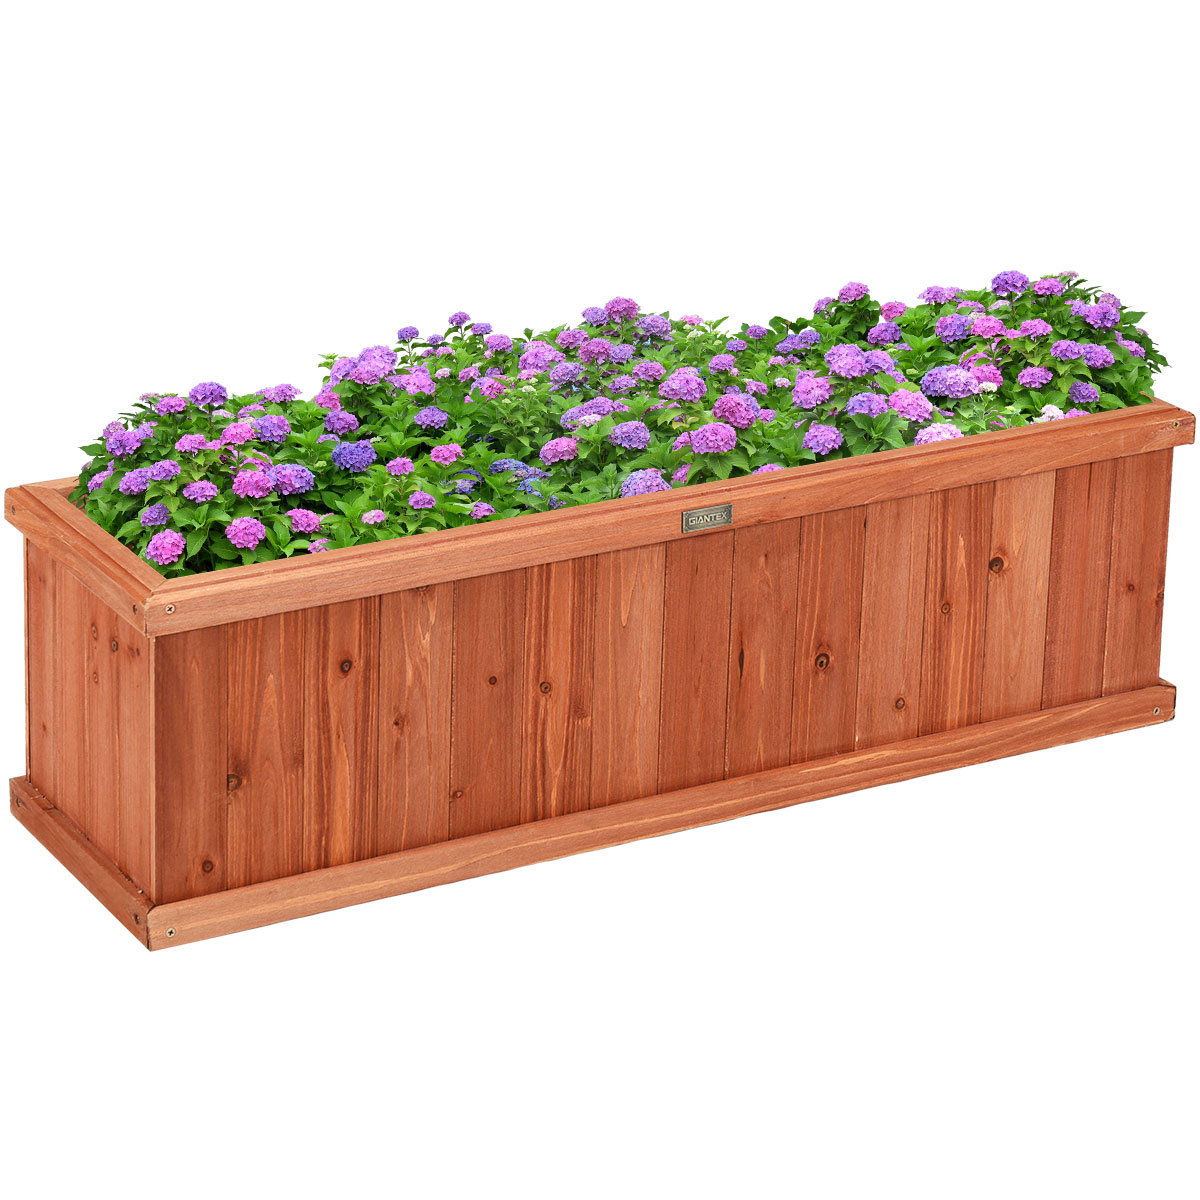 40 Inch Wooden Flower Planter Box Garden Yard Decorative Window Box Rectangular - image 1 of 10